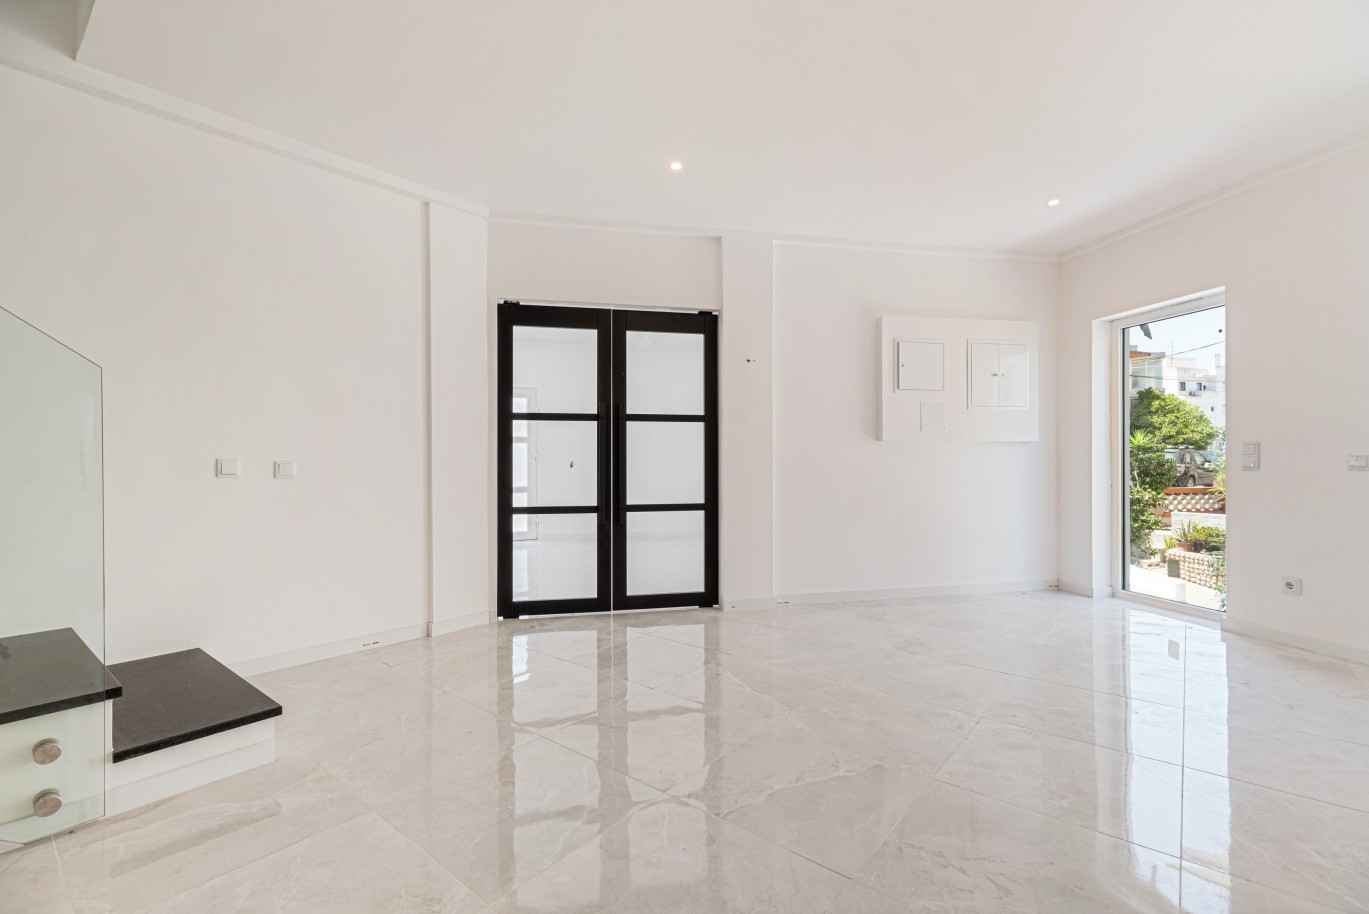 6 bedroom semi-detached villa for sale in Portimão, Algarve_231205